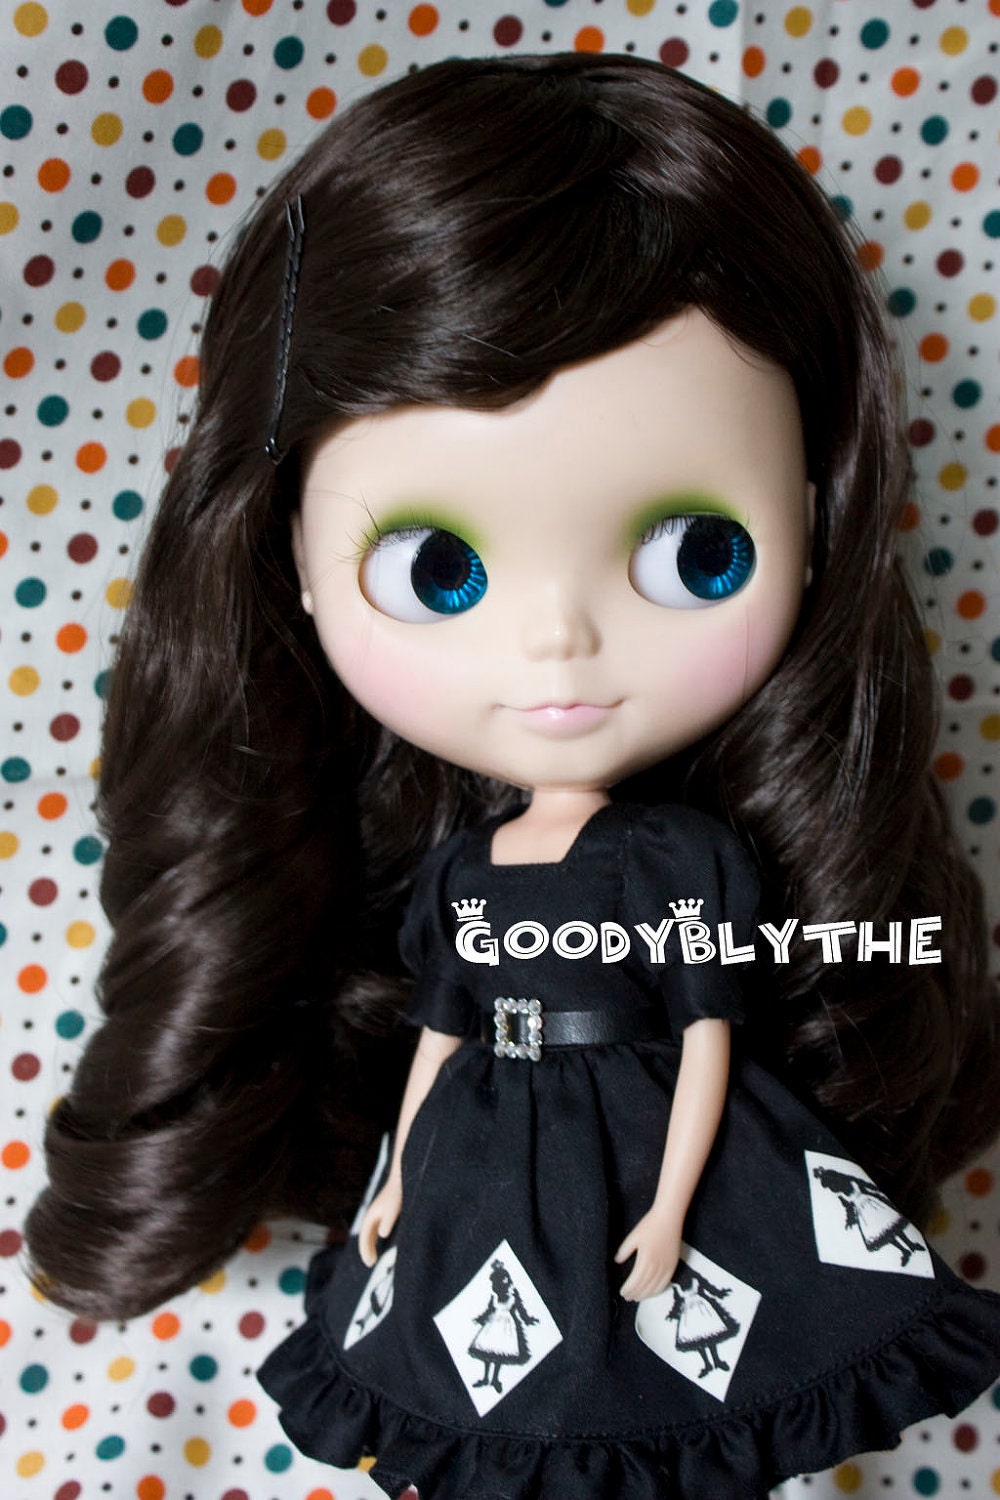 12" Goodyblythe Hair Wig for Blythe Dark Brown Curly W224